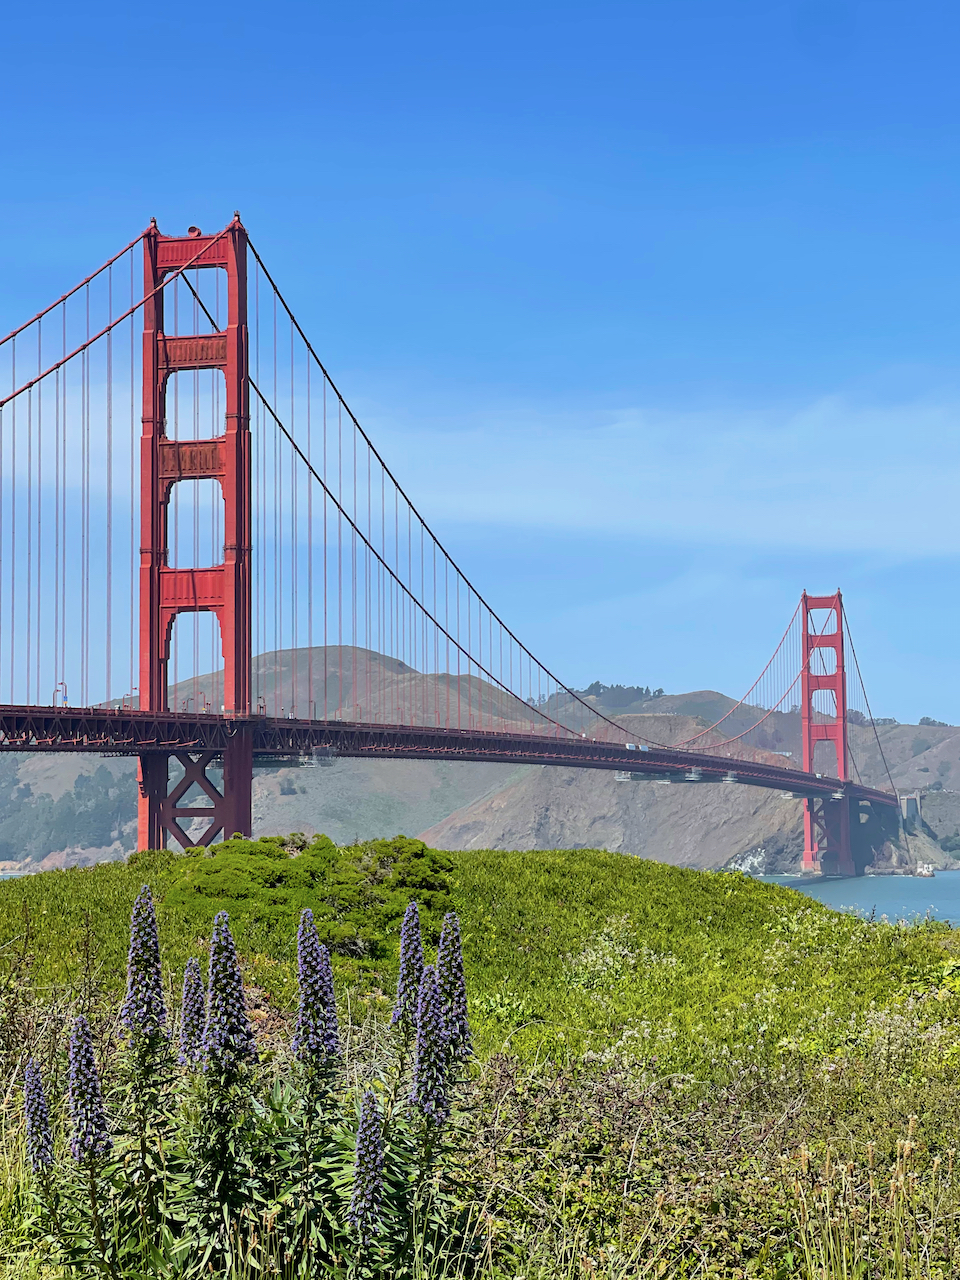 San Francisco Travel Guide Spring 2022